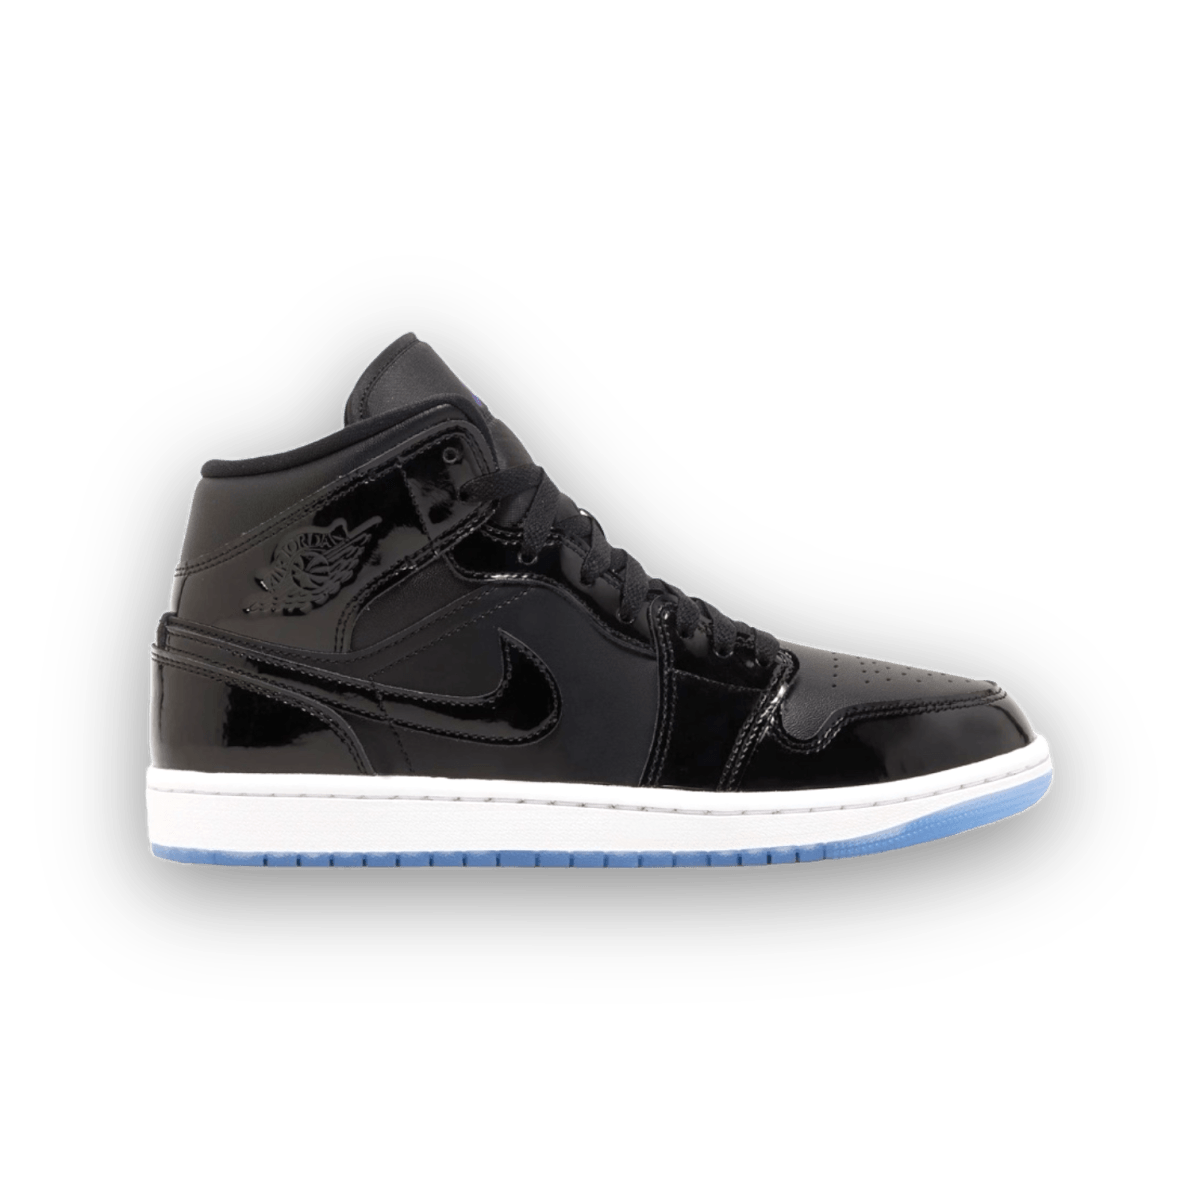 Jordan 1 Mid Space Jam - High Sneaker - Jordan - Jawns on Fire